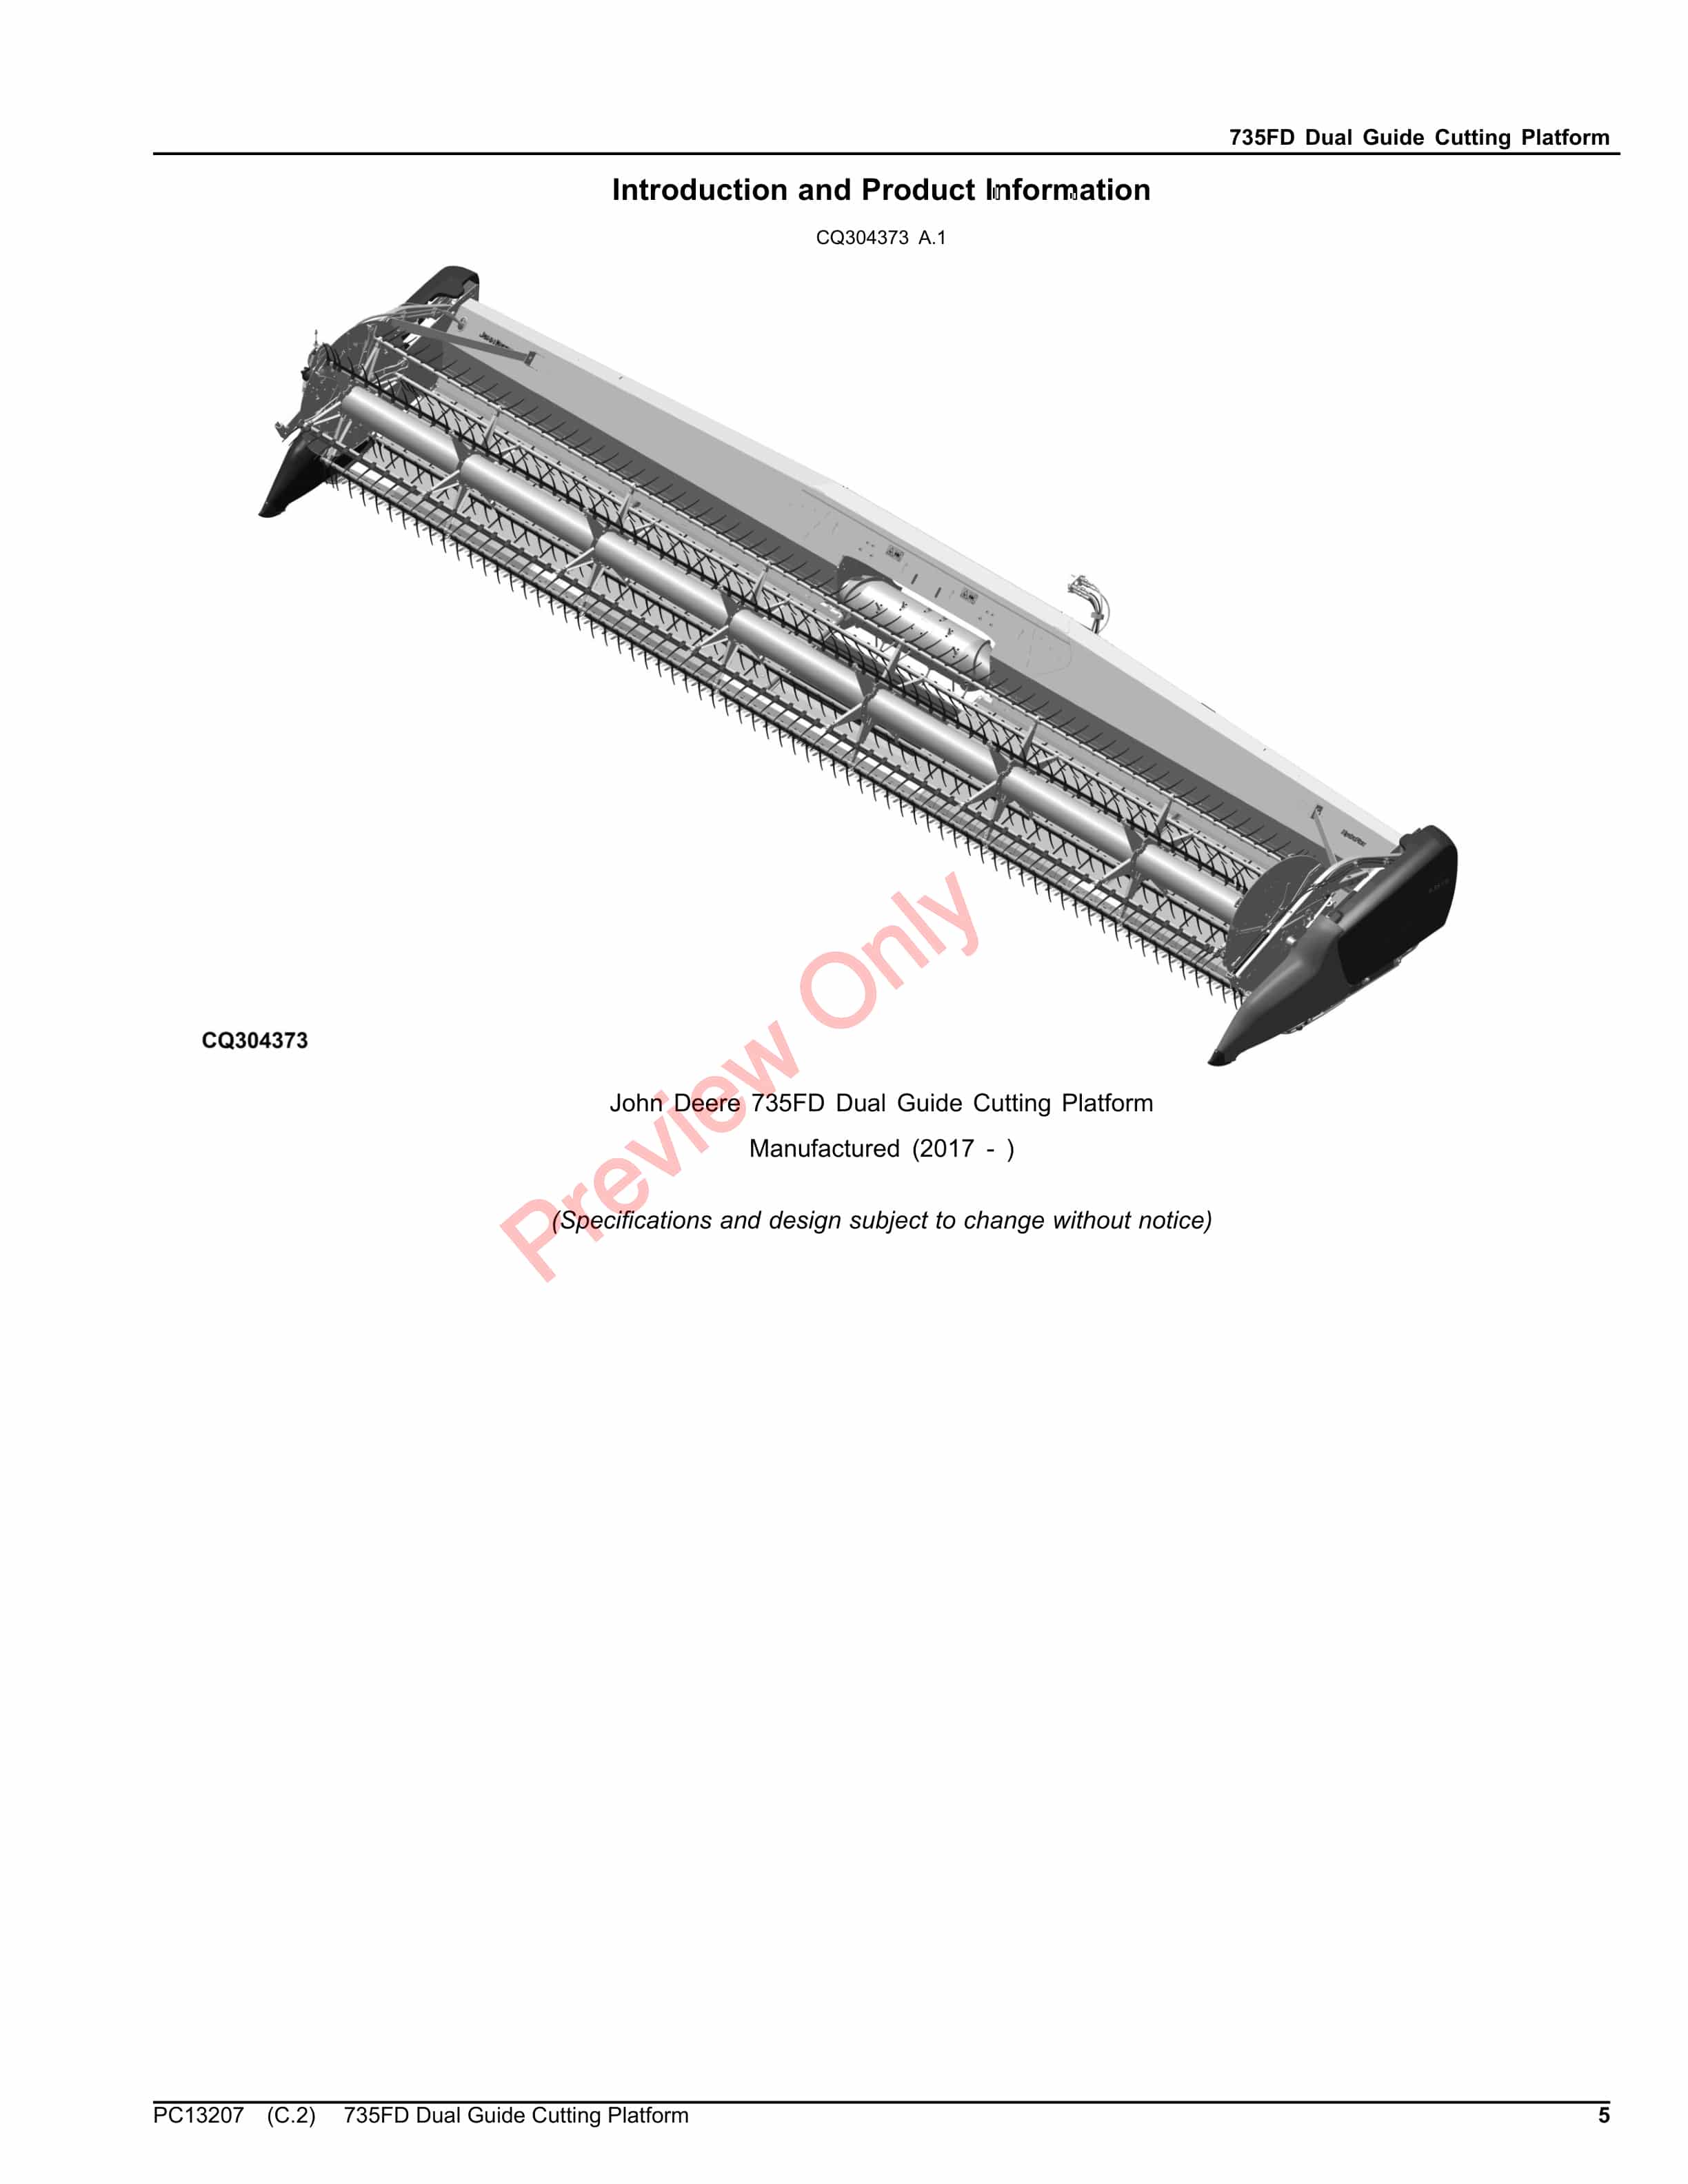 John Deere 735FD Dual Guide Cutting Platform Parts Catalog PC13207 22OCT23-5